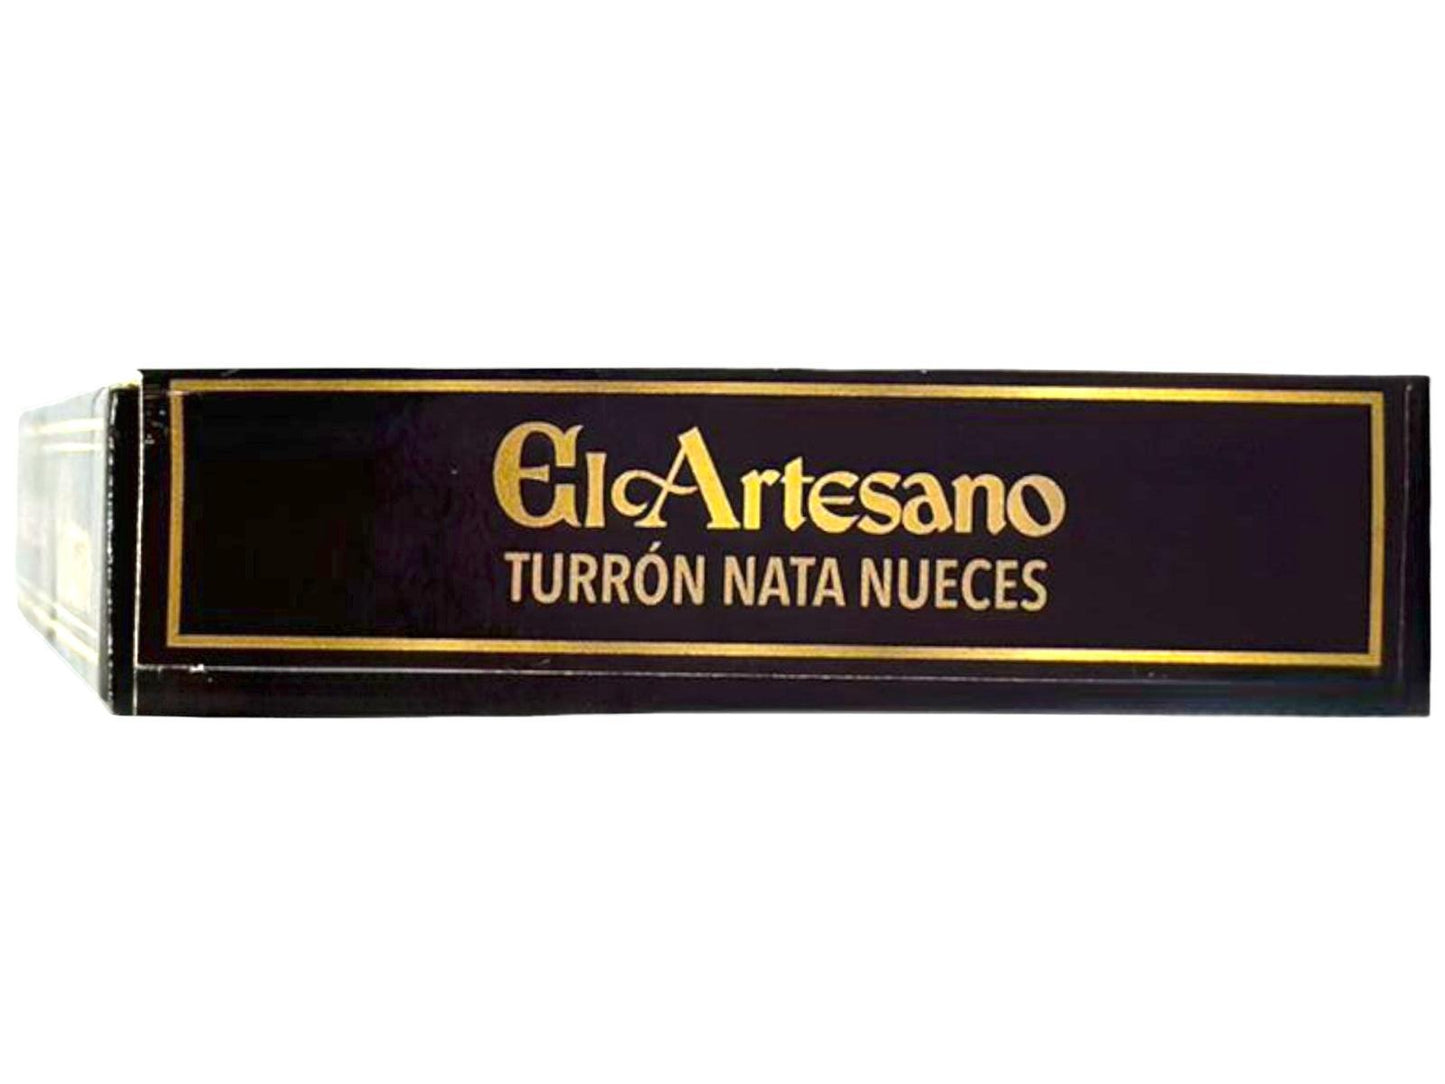 El Artesano Turron de Nata Nueces Spanish Turron from Walnuts 200g